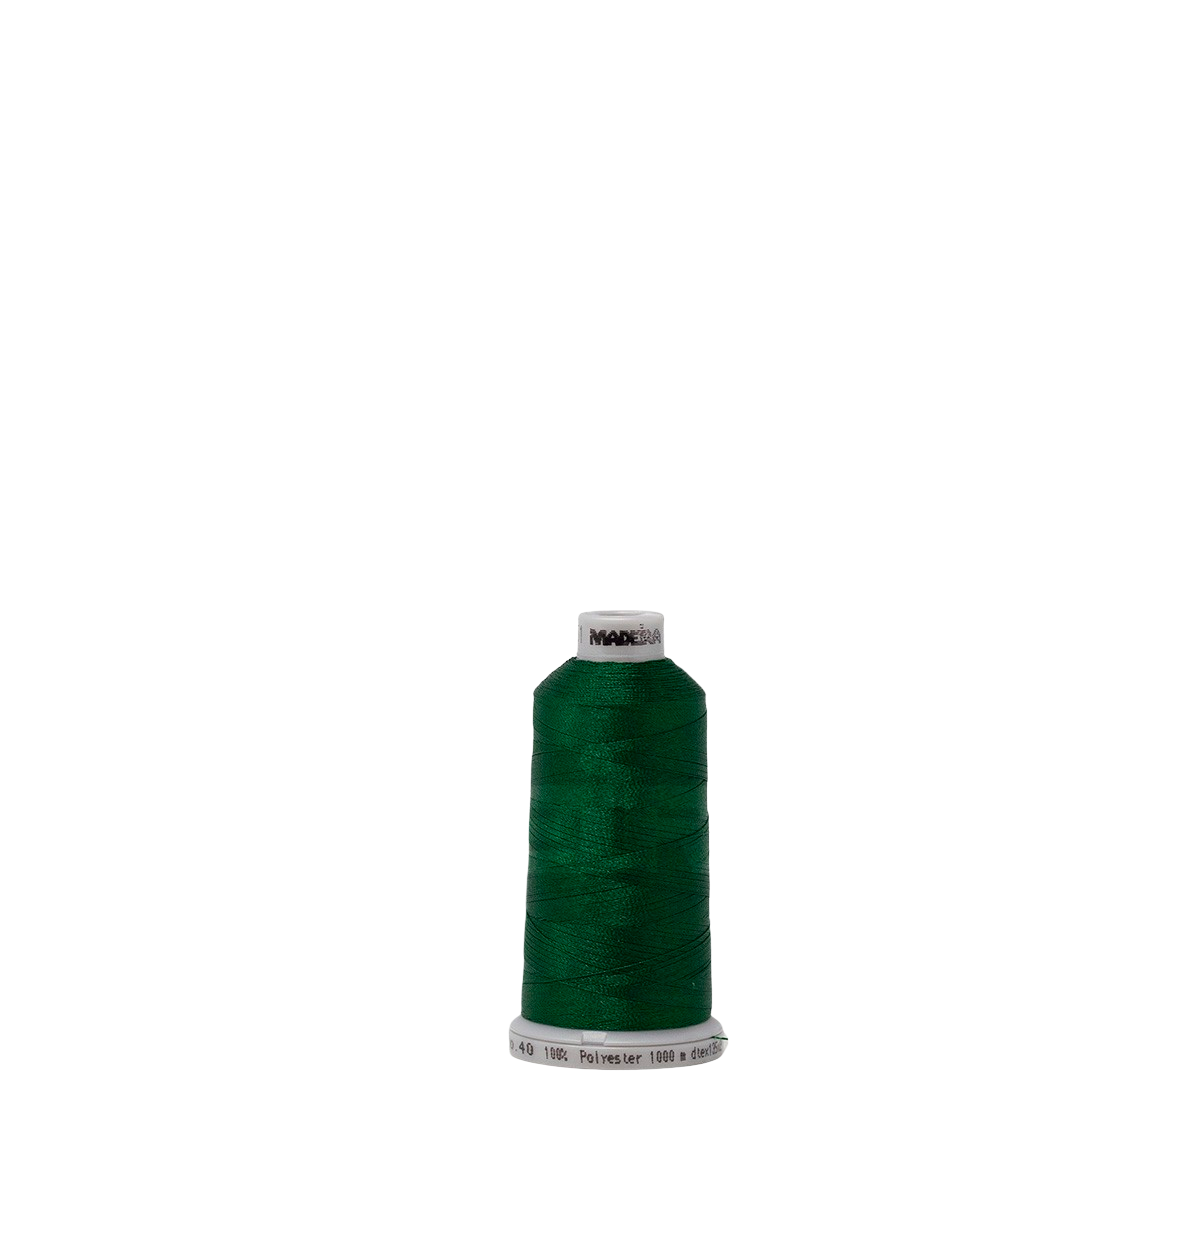 Cadmium Green 1851 #40 Weight Madeira Polyneon Thread-2